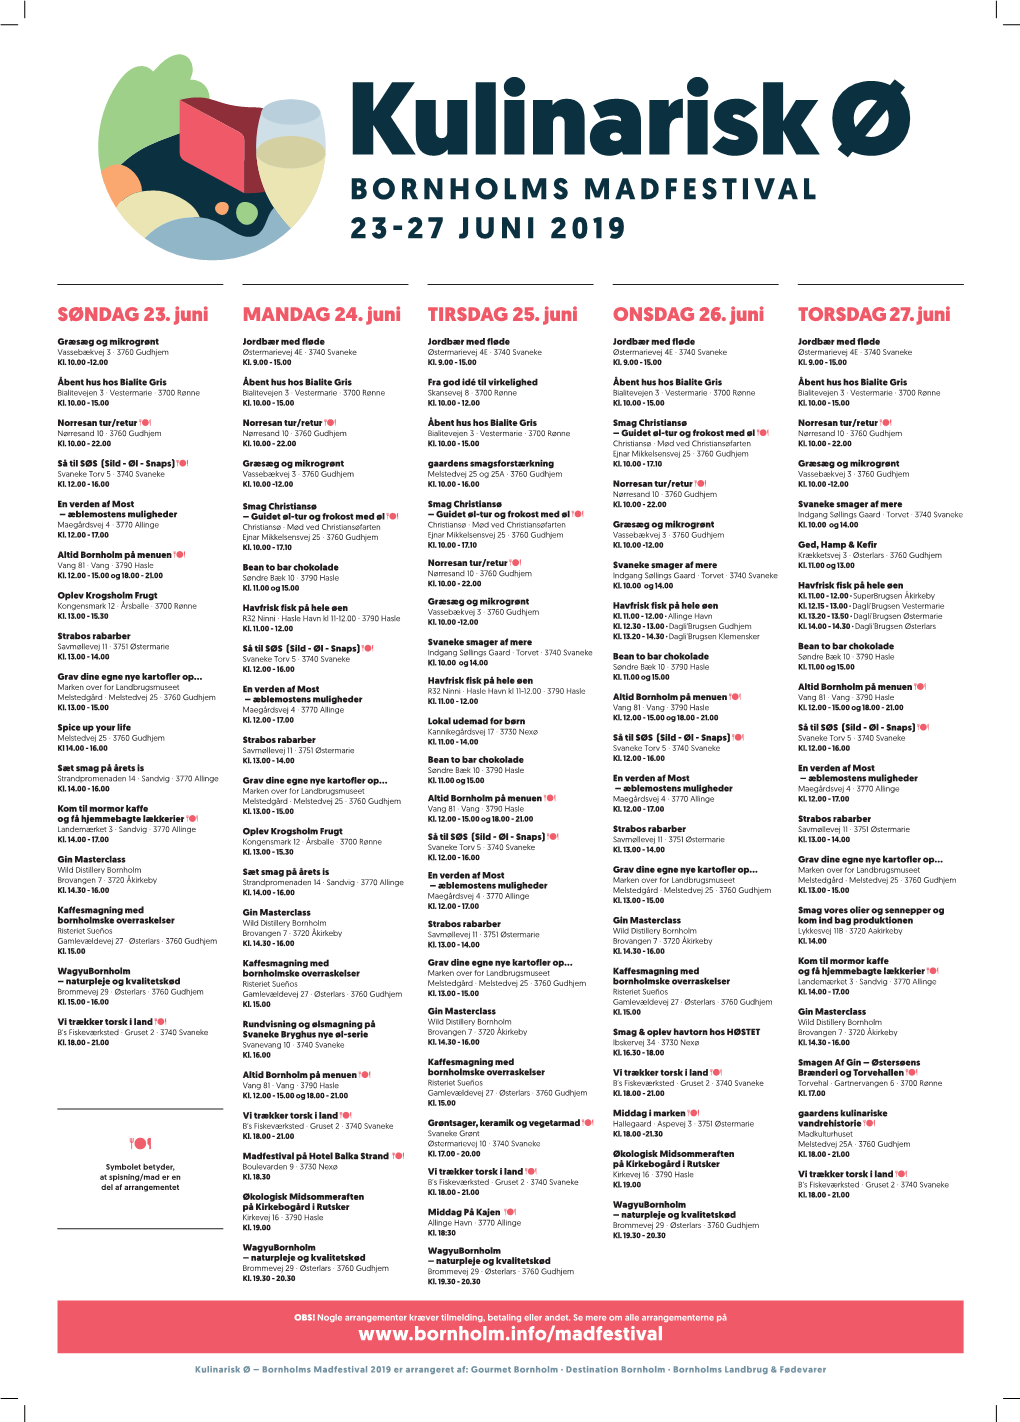 Bornholms Madfestival 23-27 Juni 2019